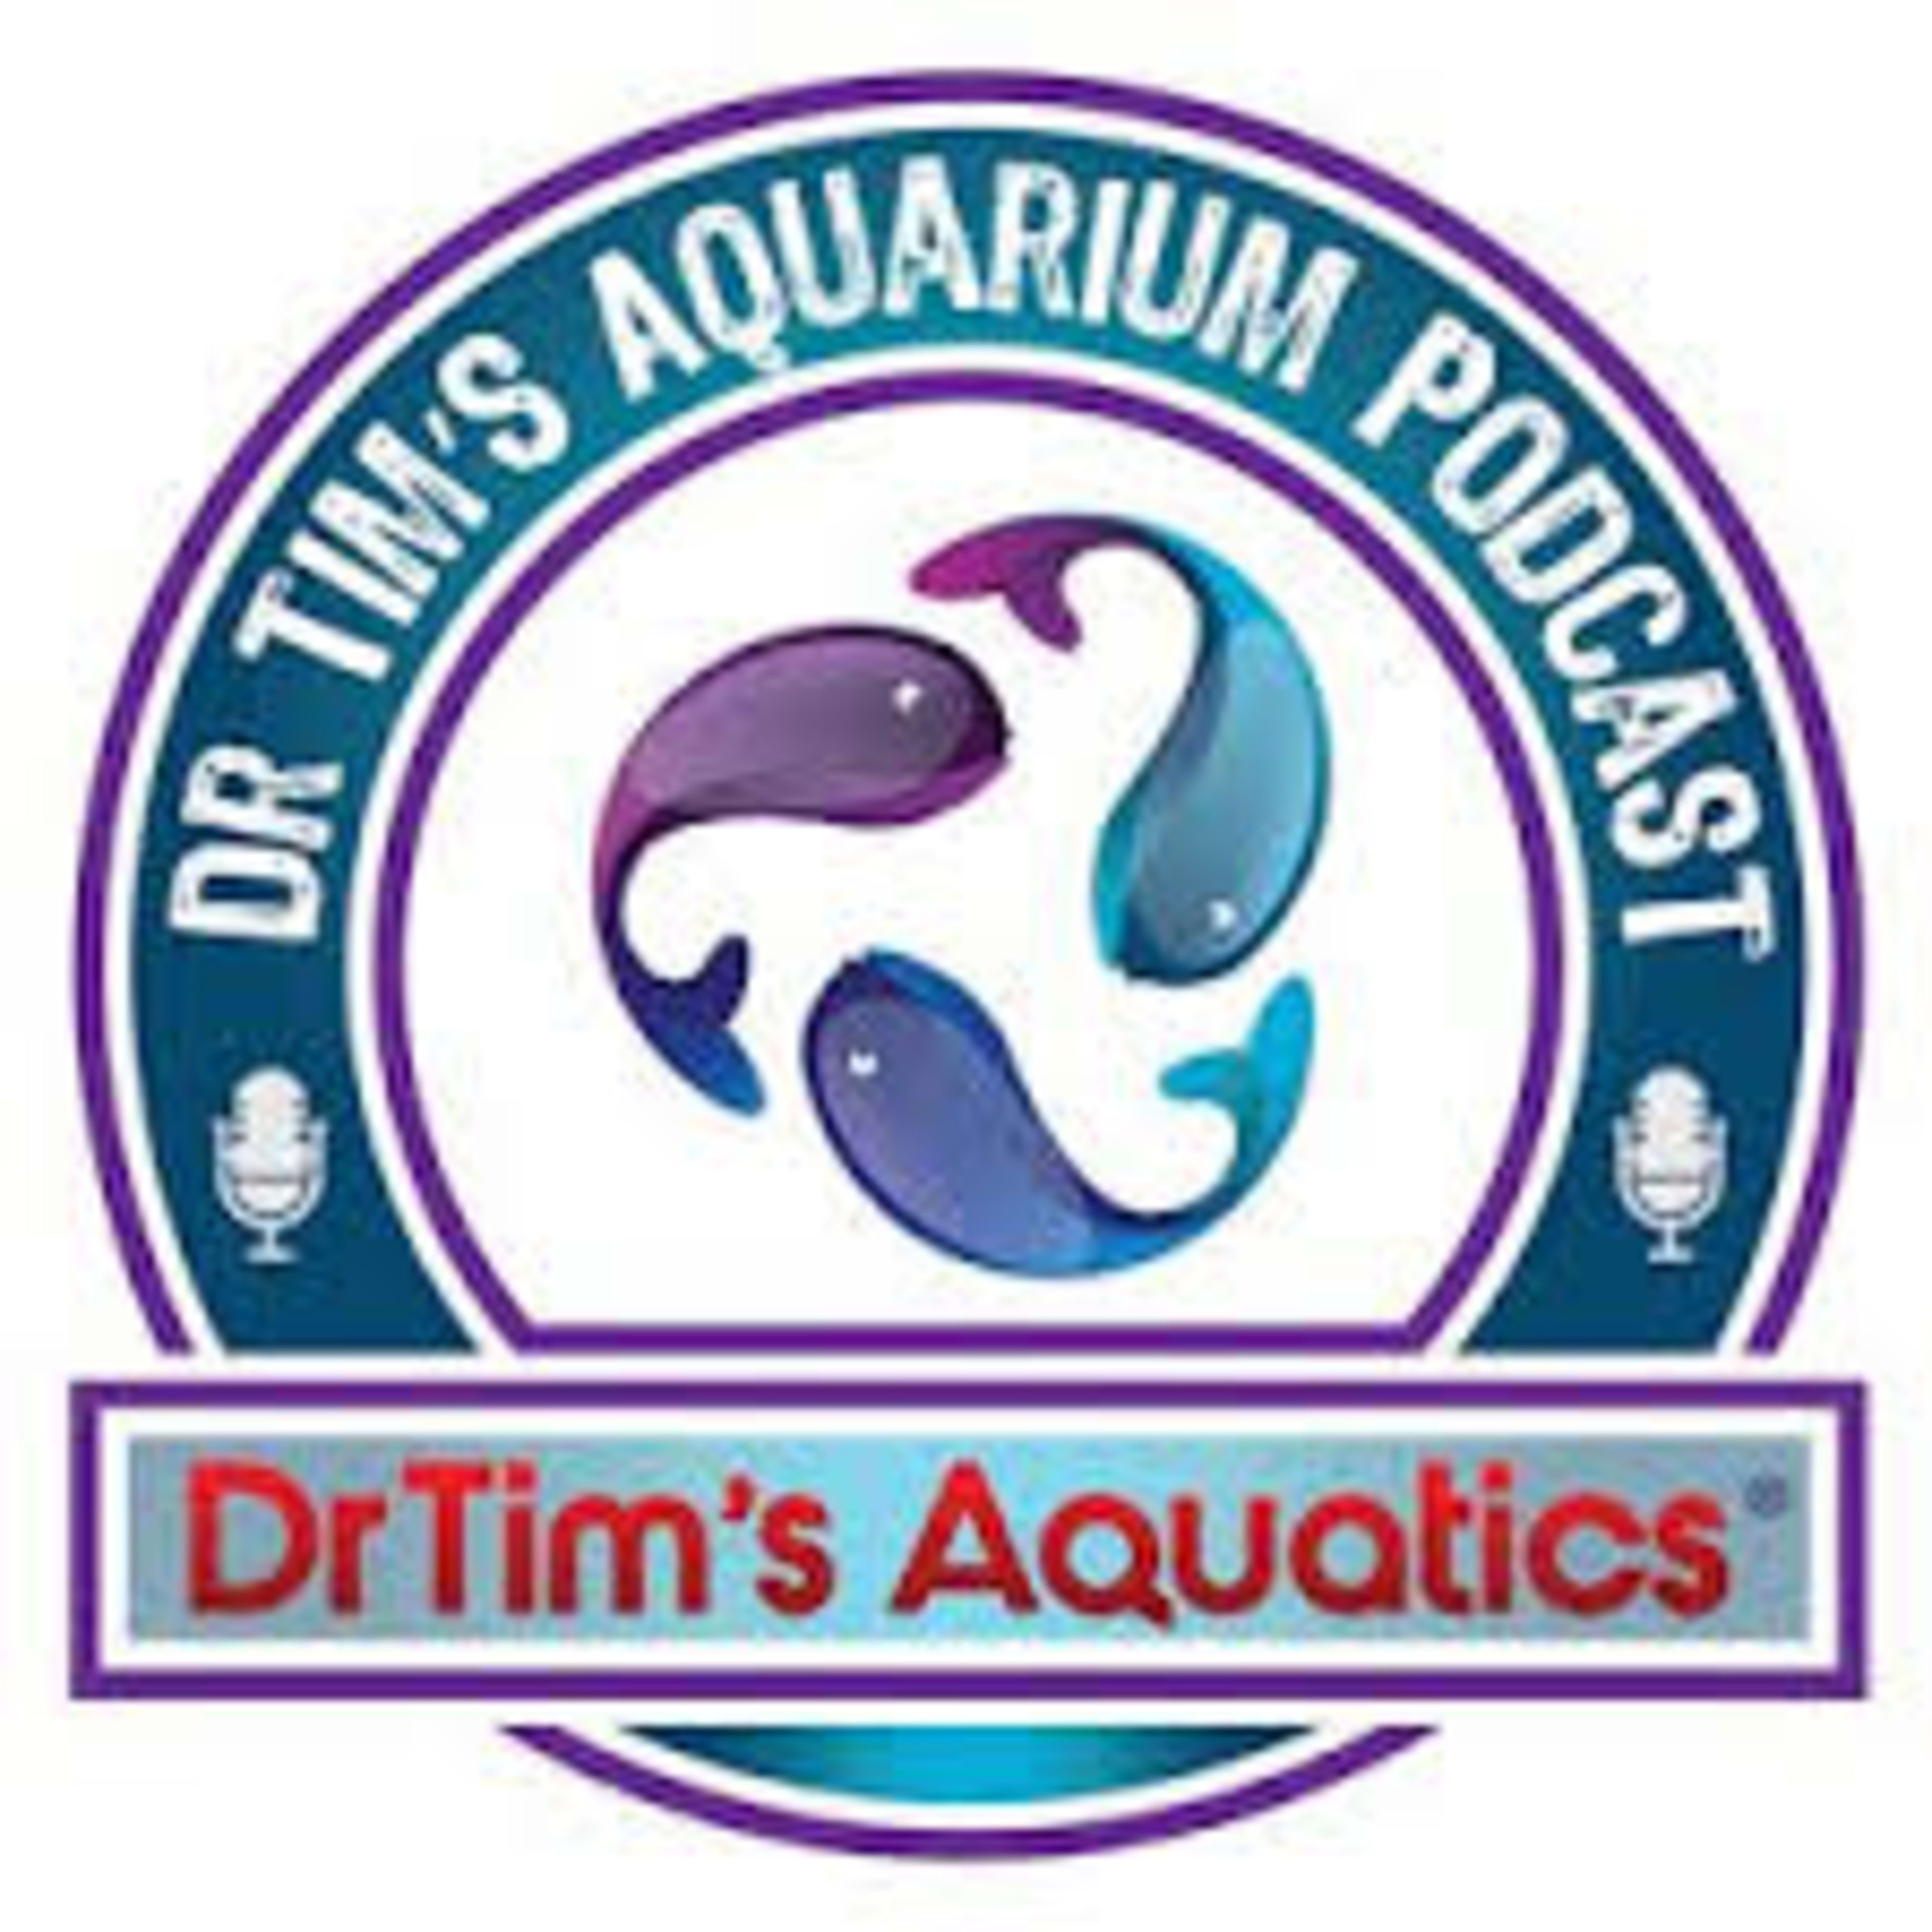 DrTim's AquaticsCode